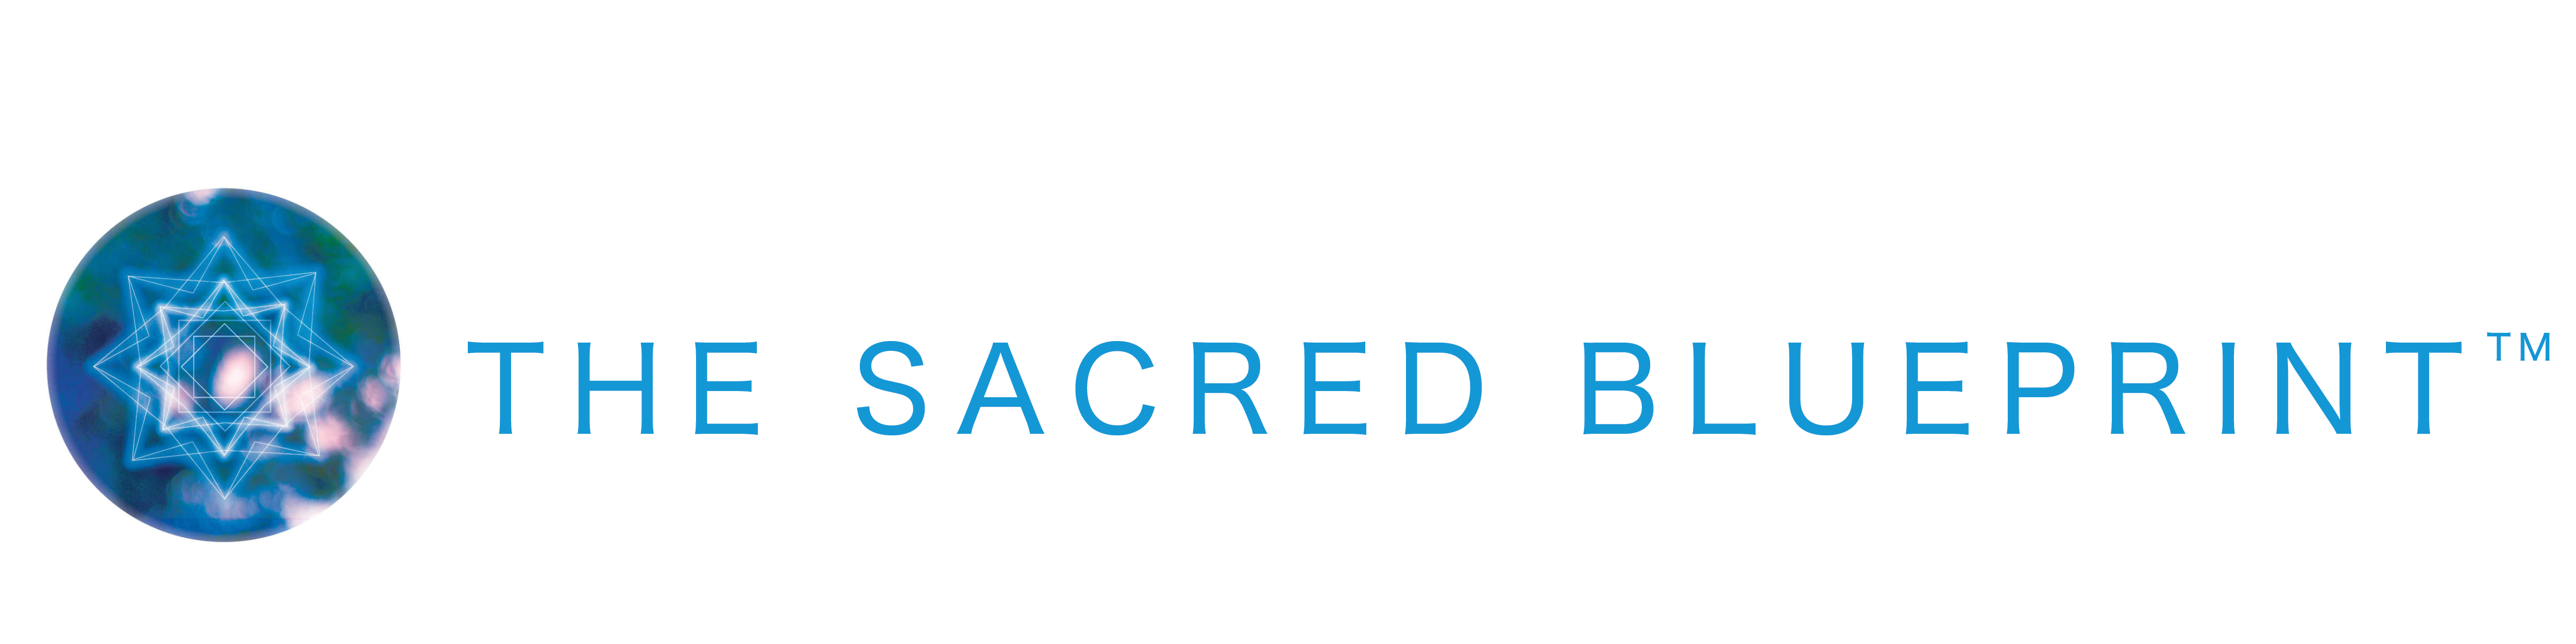 The Sacred Blueprint™ logo